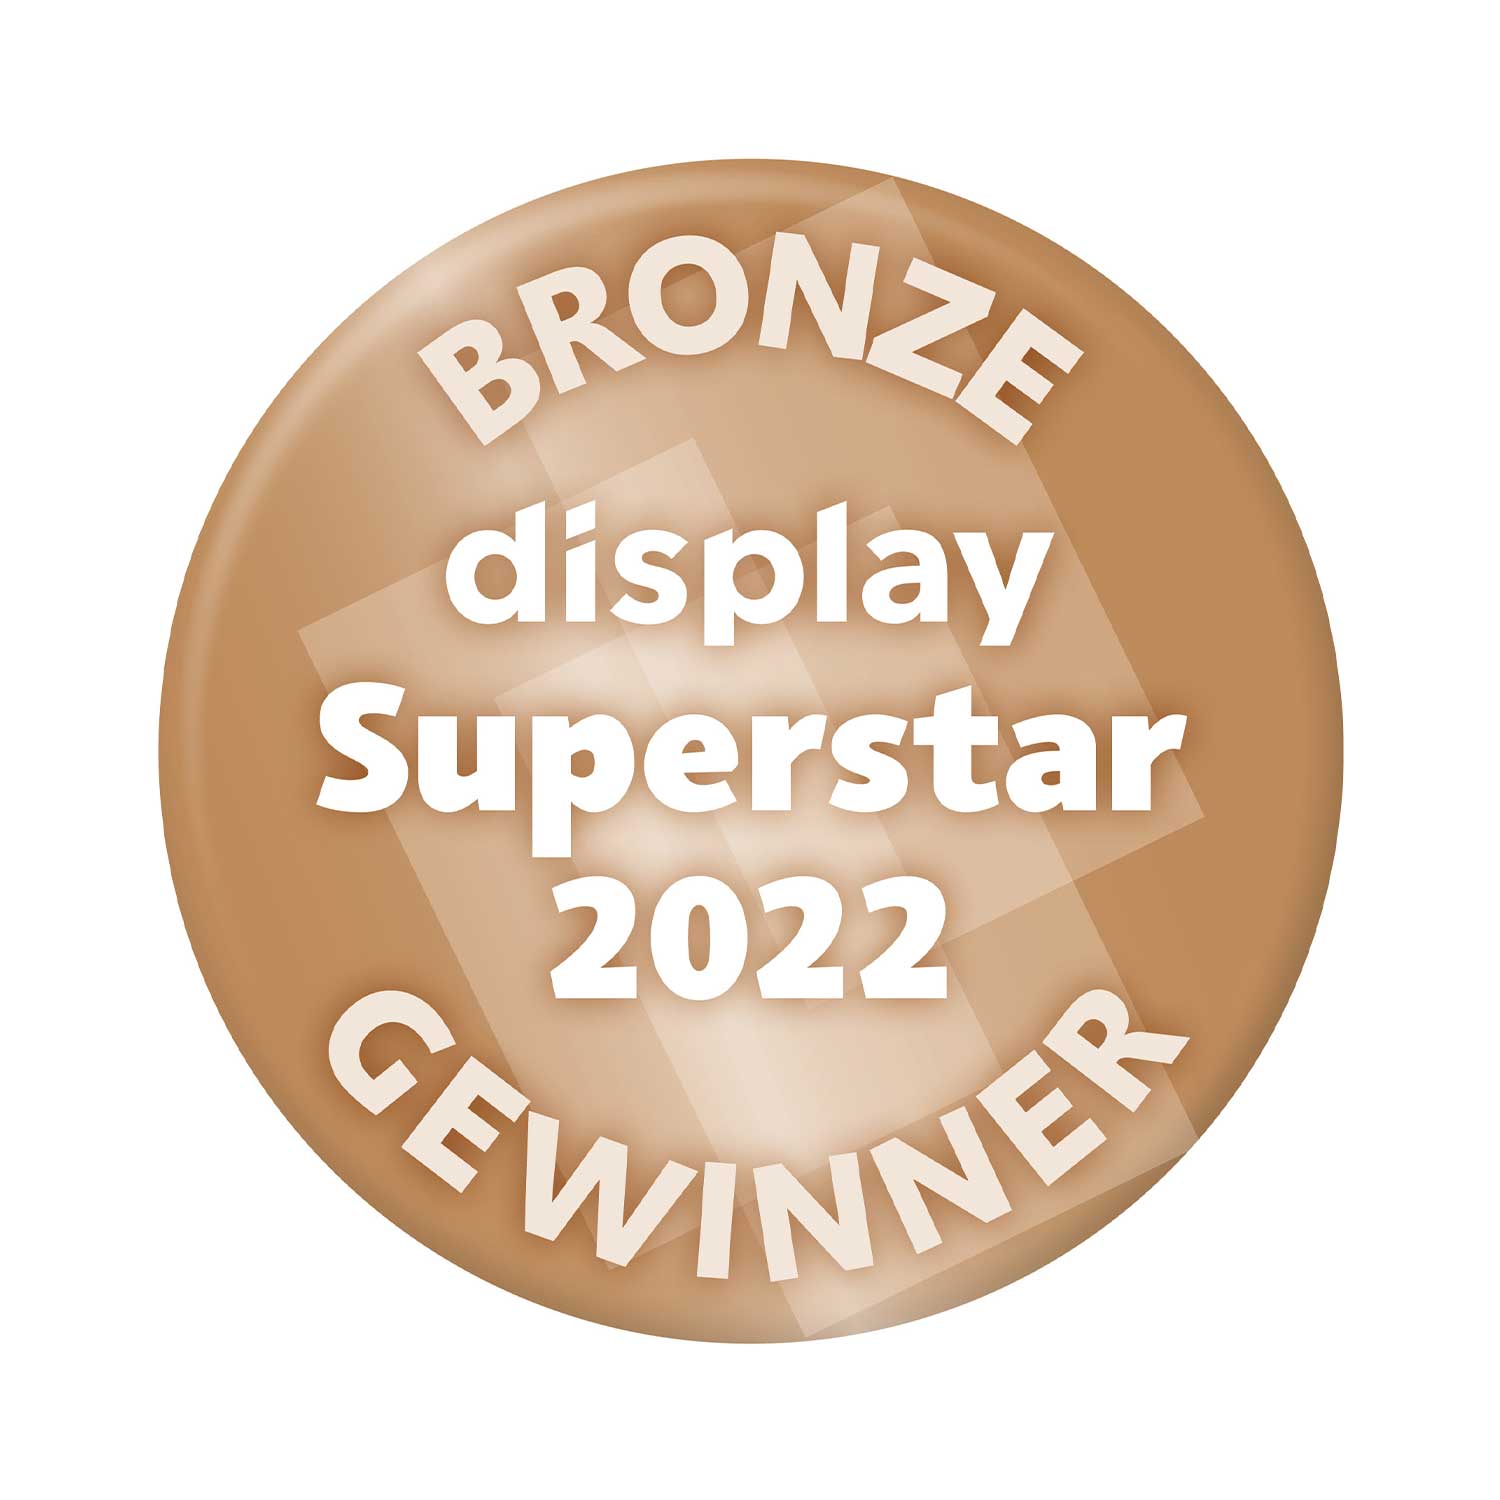 brązowa display Superstar Award 2022